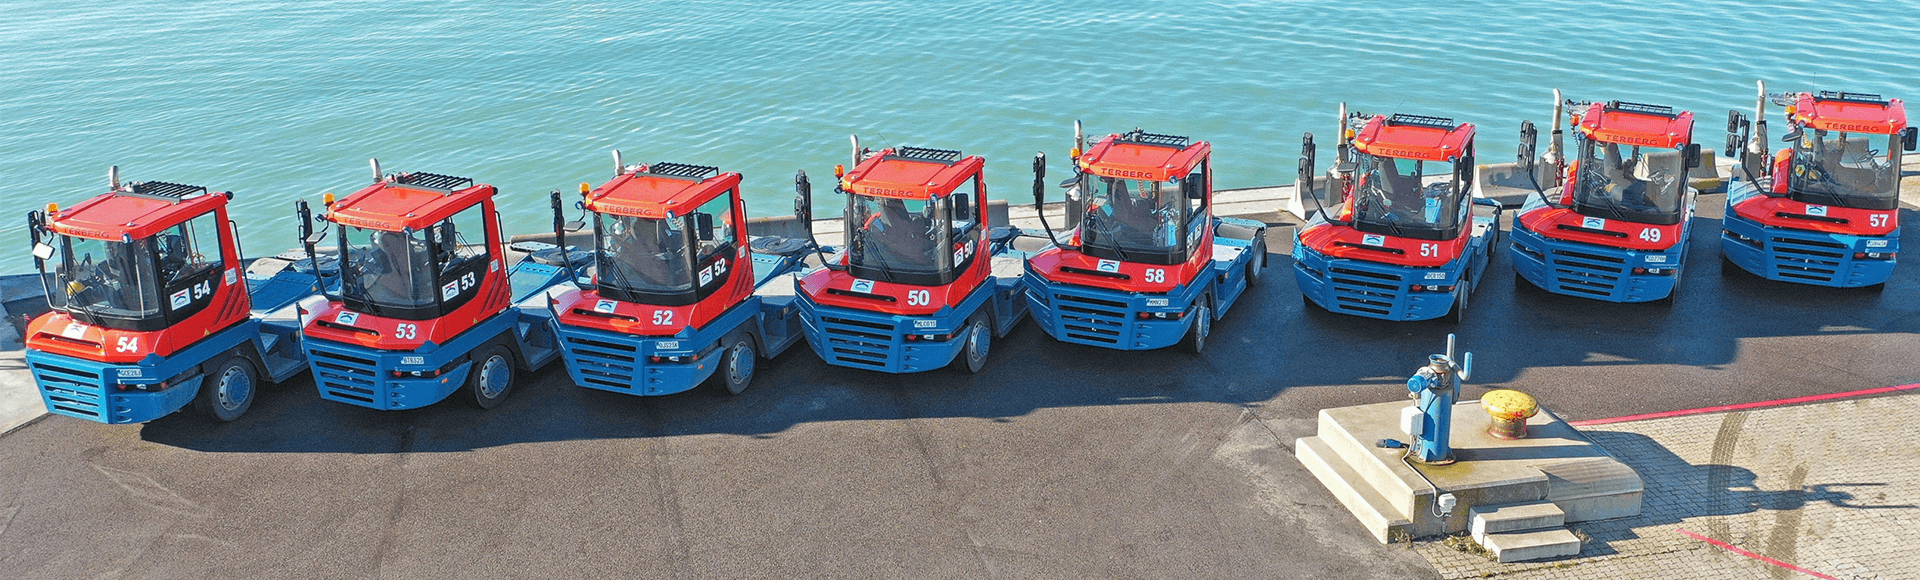 Scandinavia’s largest RoRo port in Trelleborg expands its vehicle fleet